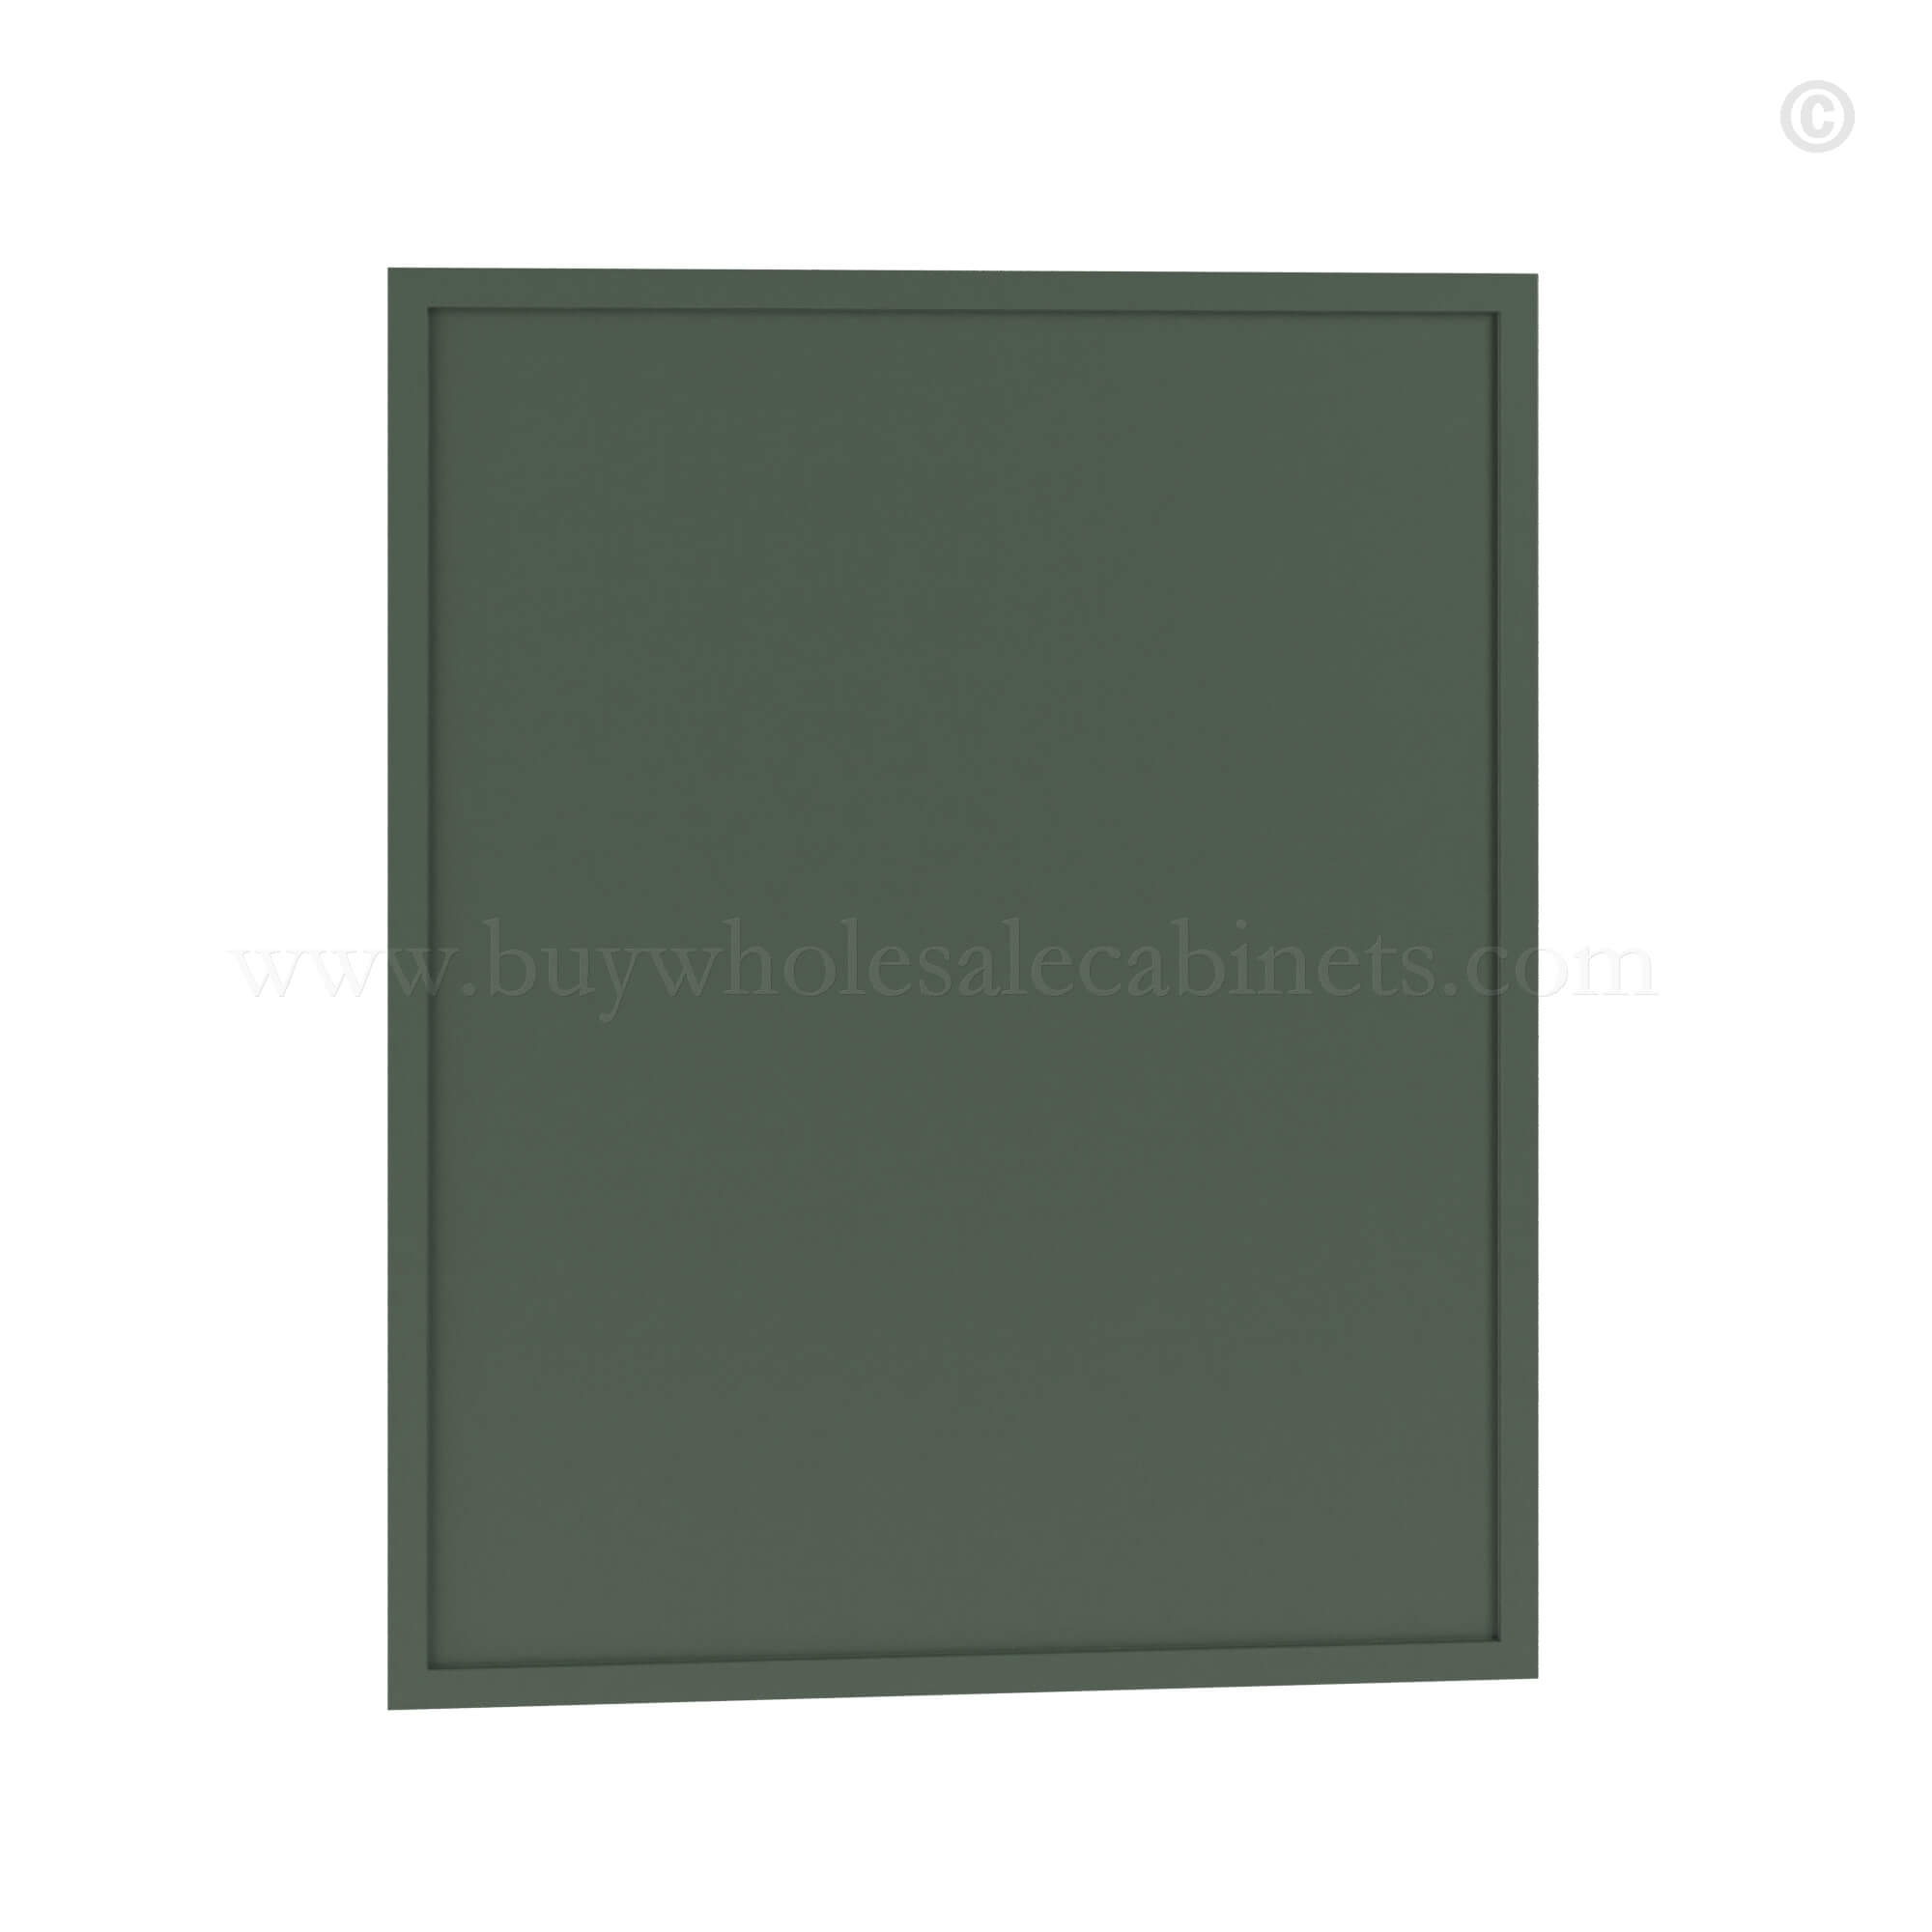 slim shaker green base false door, rta cabinets, wholesale cabinets